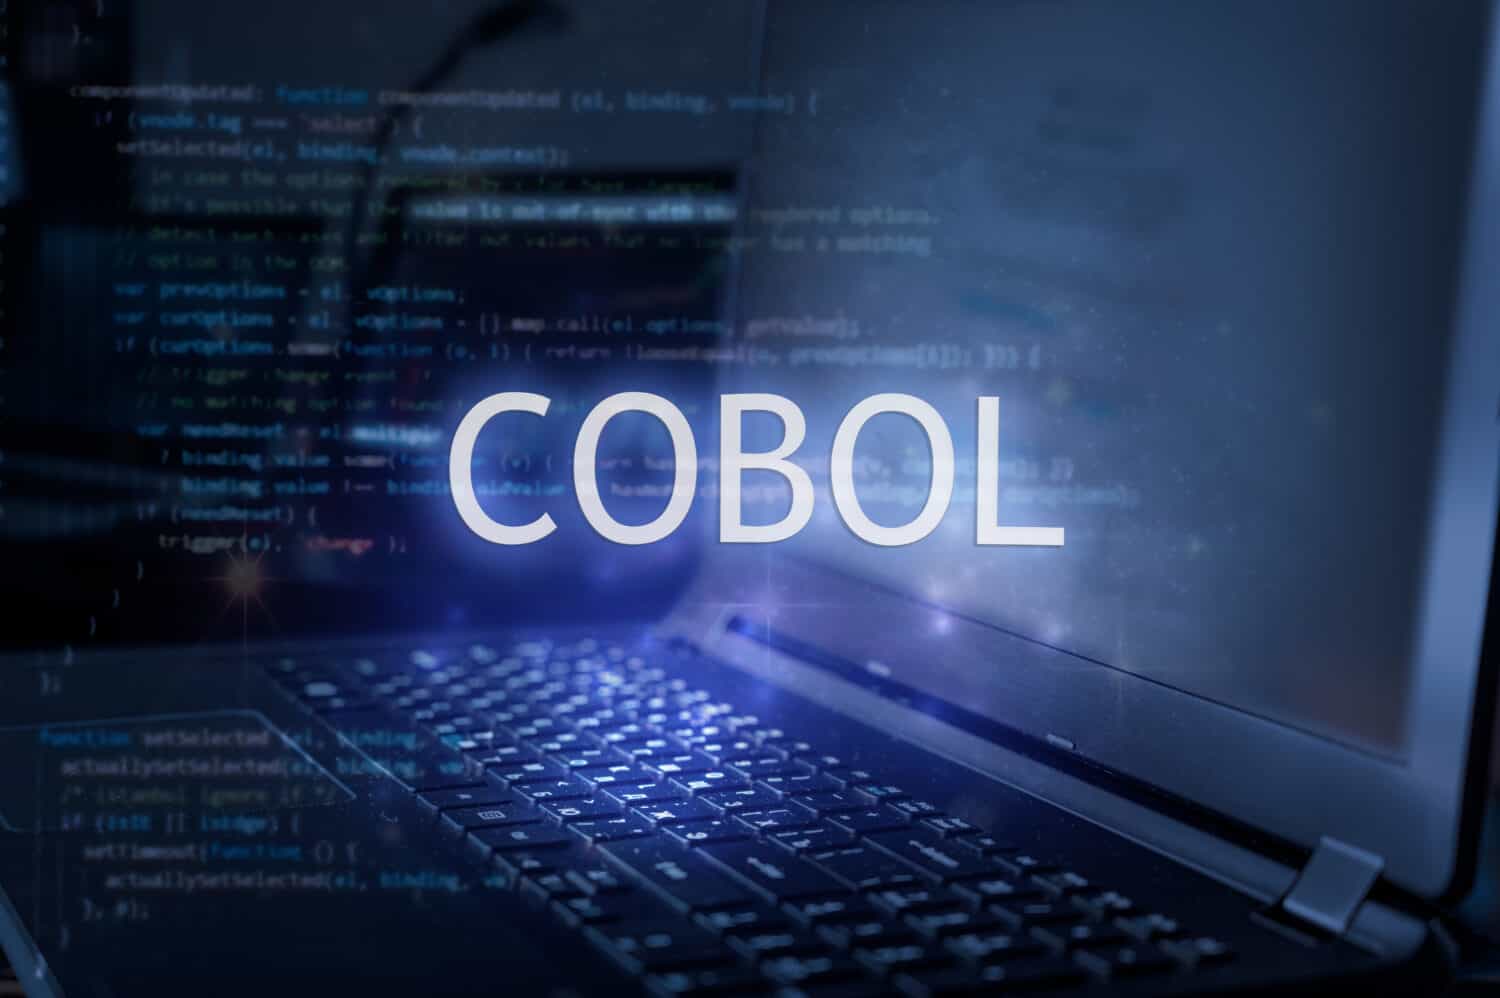 Cobol inscription against laptop and code background. Technology concept.